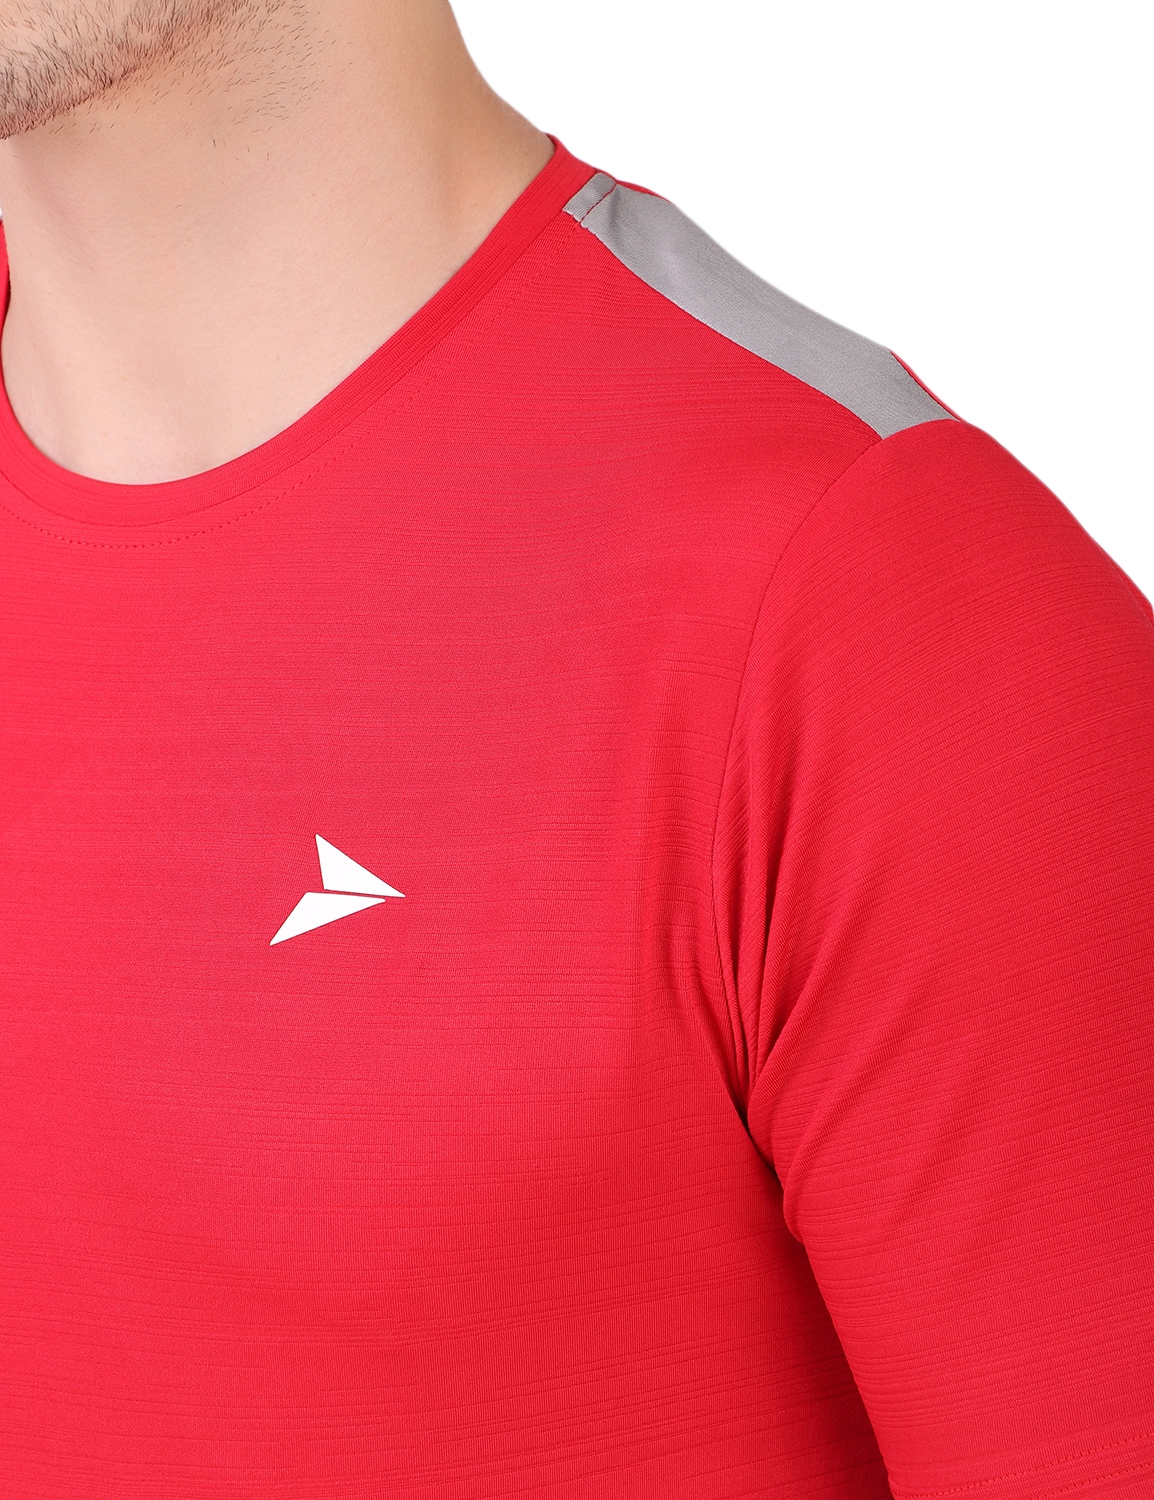 Fitinc | Fitinc Men's Round Neck Slimfit Gym & Active Sports Red T-Shirt 4